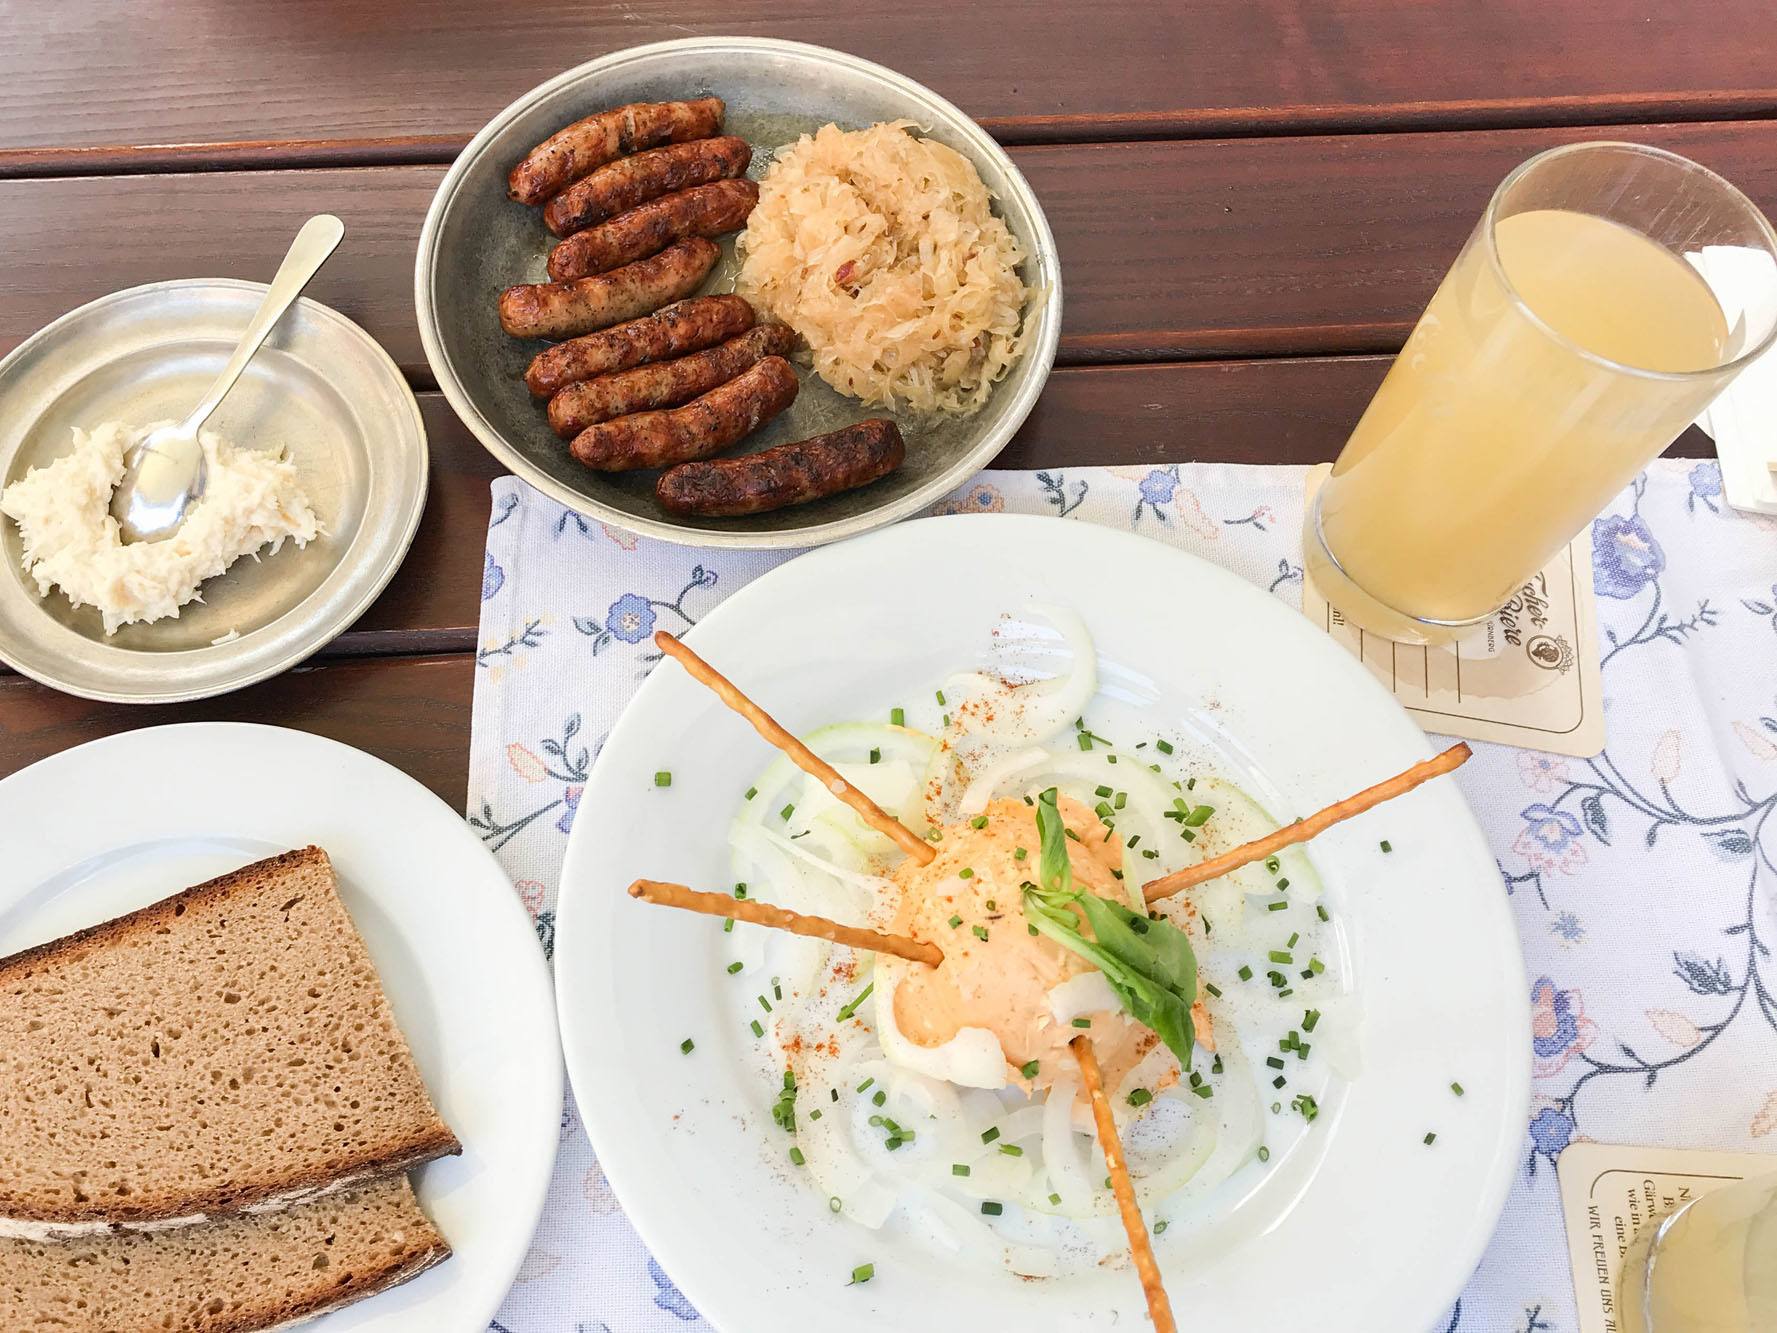 A Bavarian lunch of sausages, sauerkraut, Obatzda spread, and apple juice.